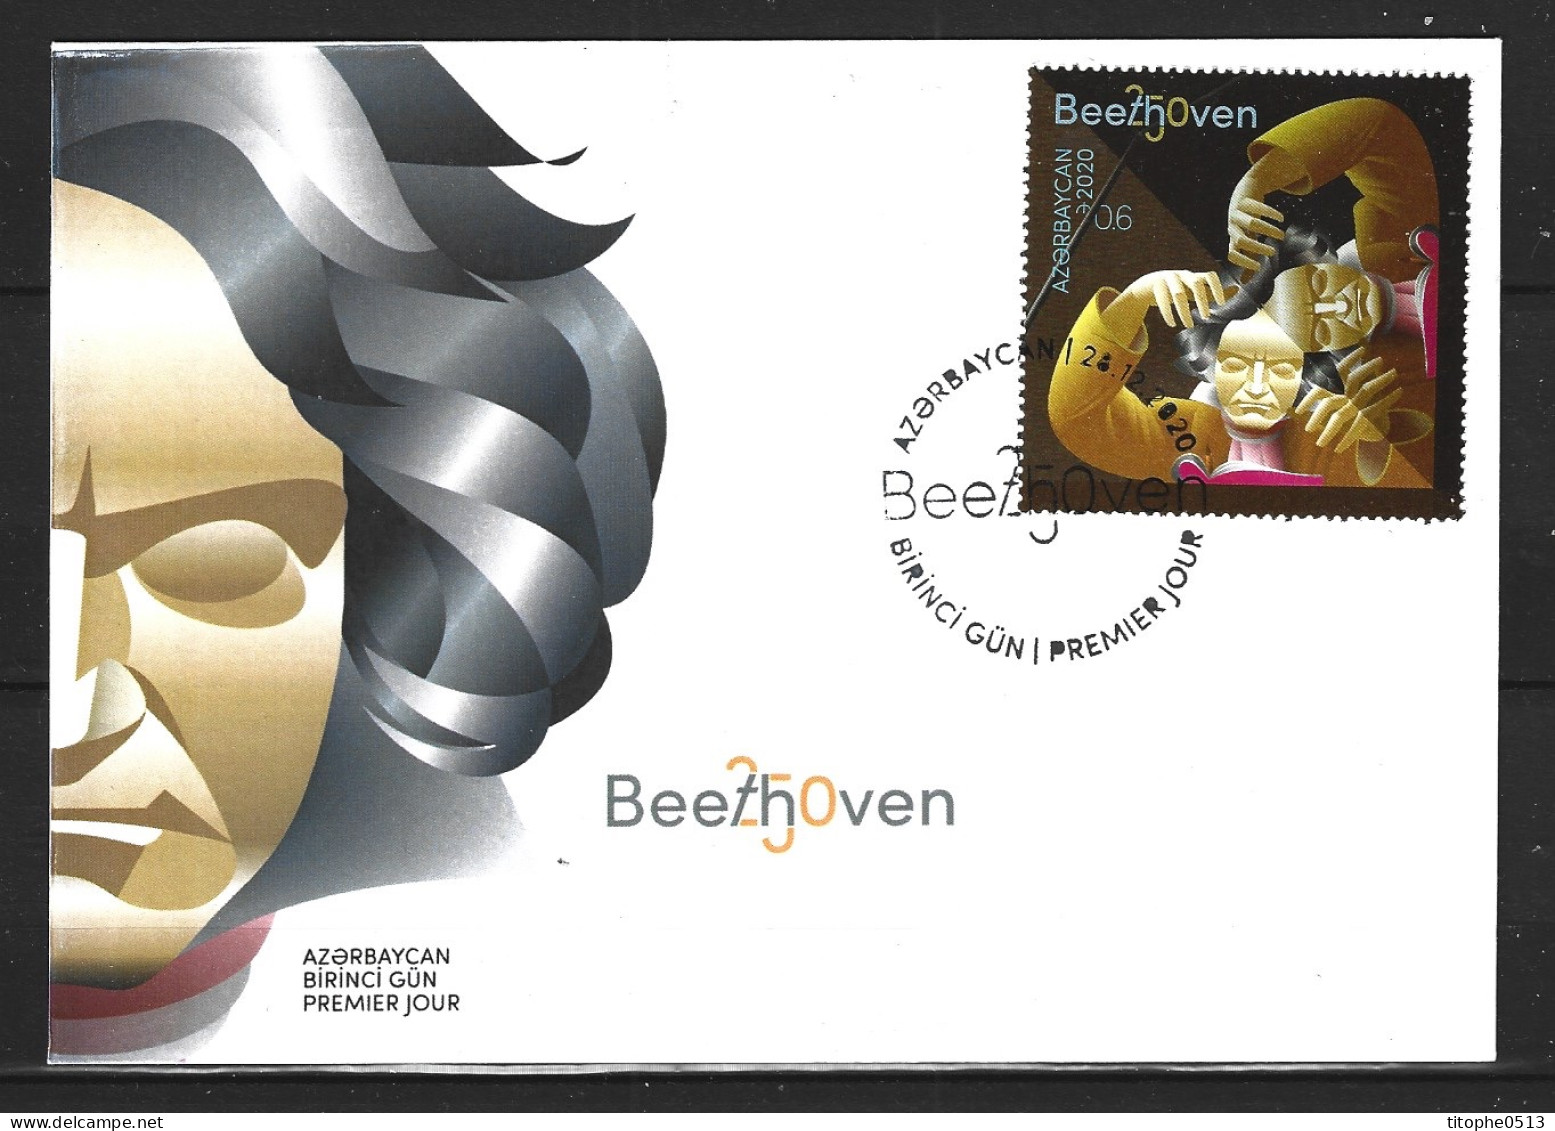 AZERBAIDJAN. N°1260 De 2020 Sur Enveloppe 1er Jour. Beethoven. - Music